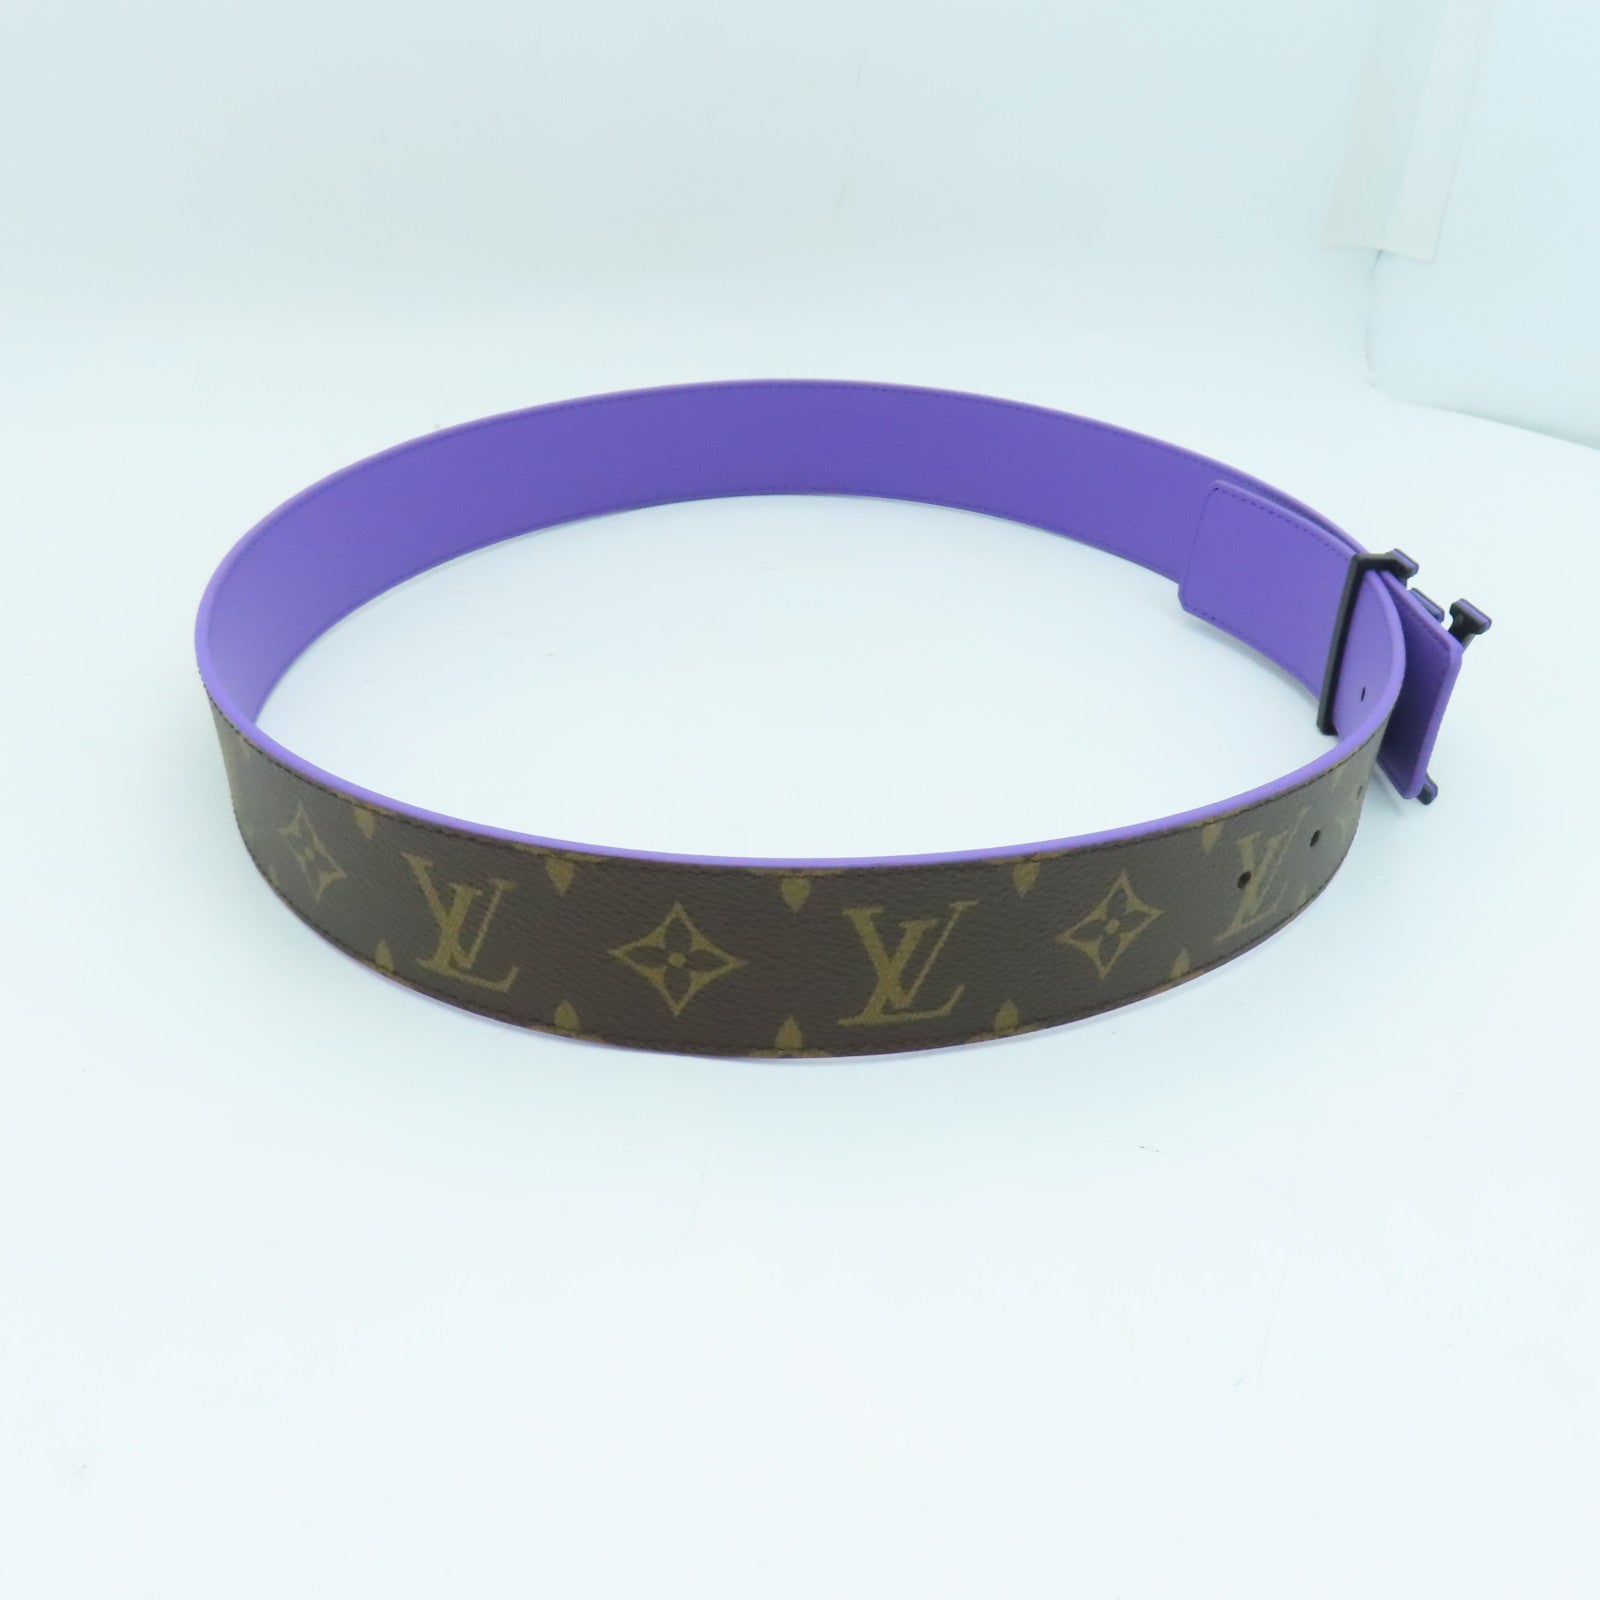 LOUIS VUITTON Monogram Belt belt brown purple